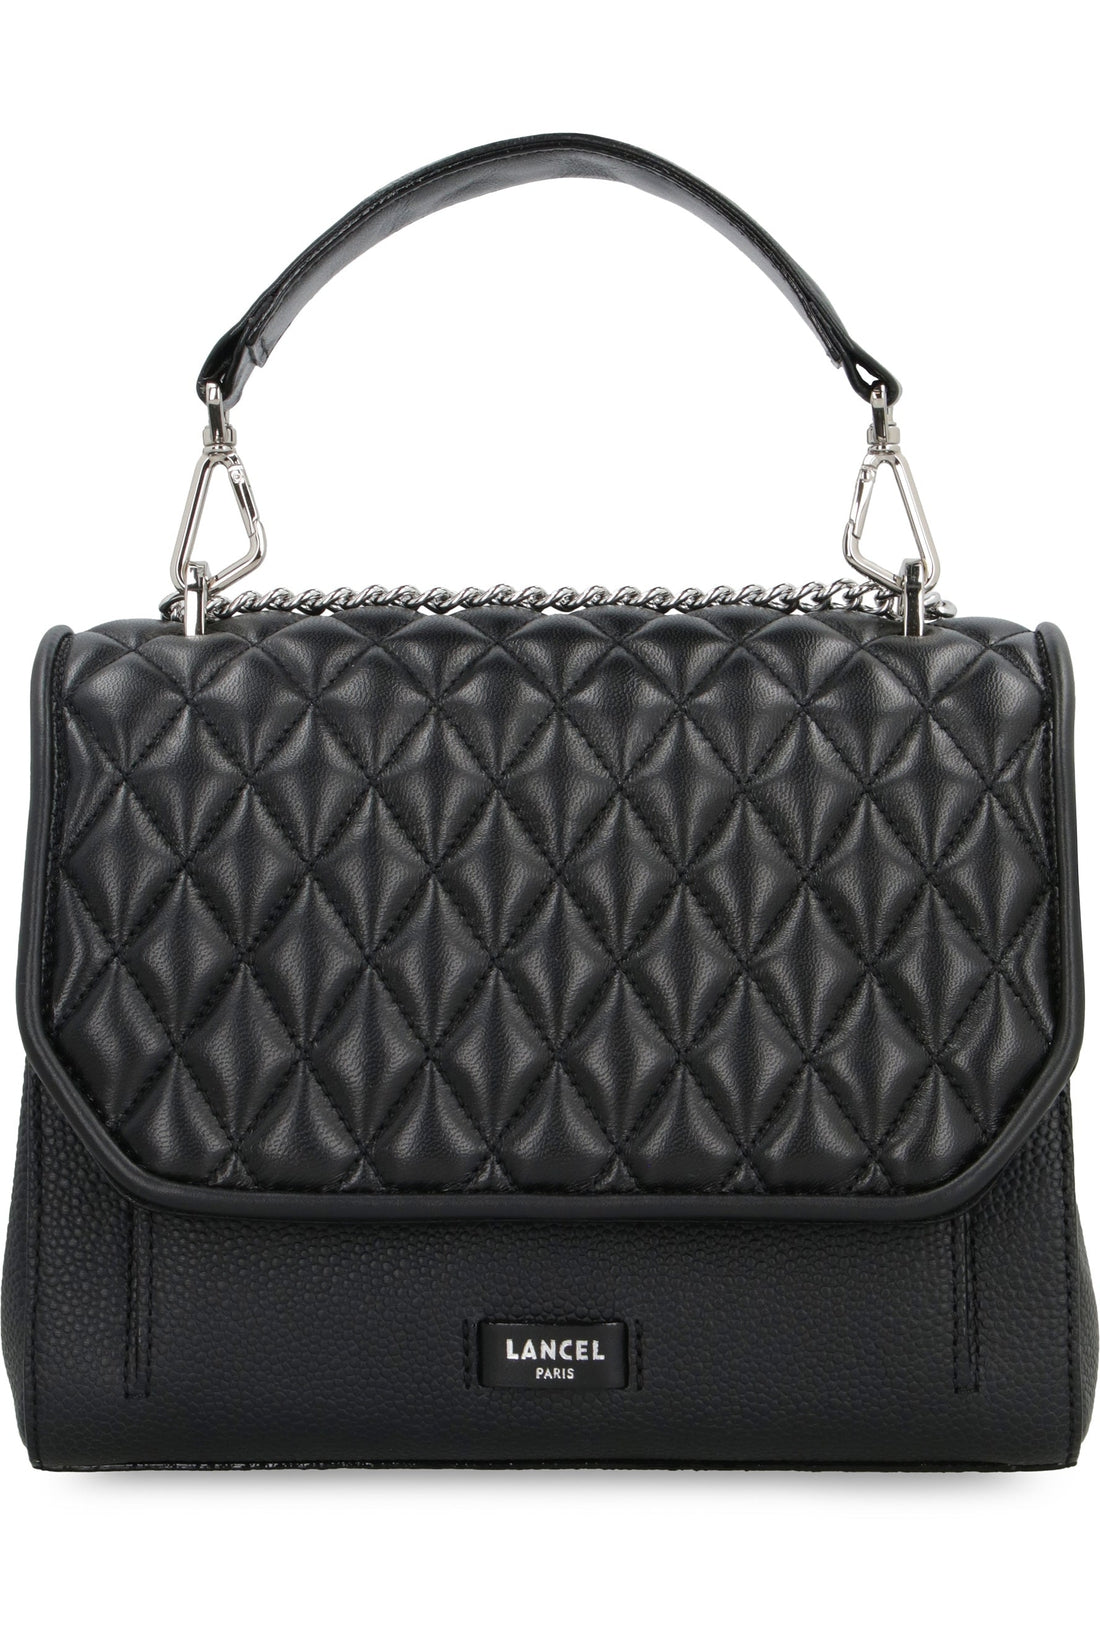 Lancel-OUTLET-SALE-Ninon quilted leather handbag-ARCHIVIST